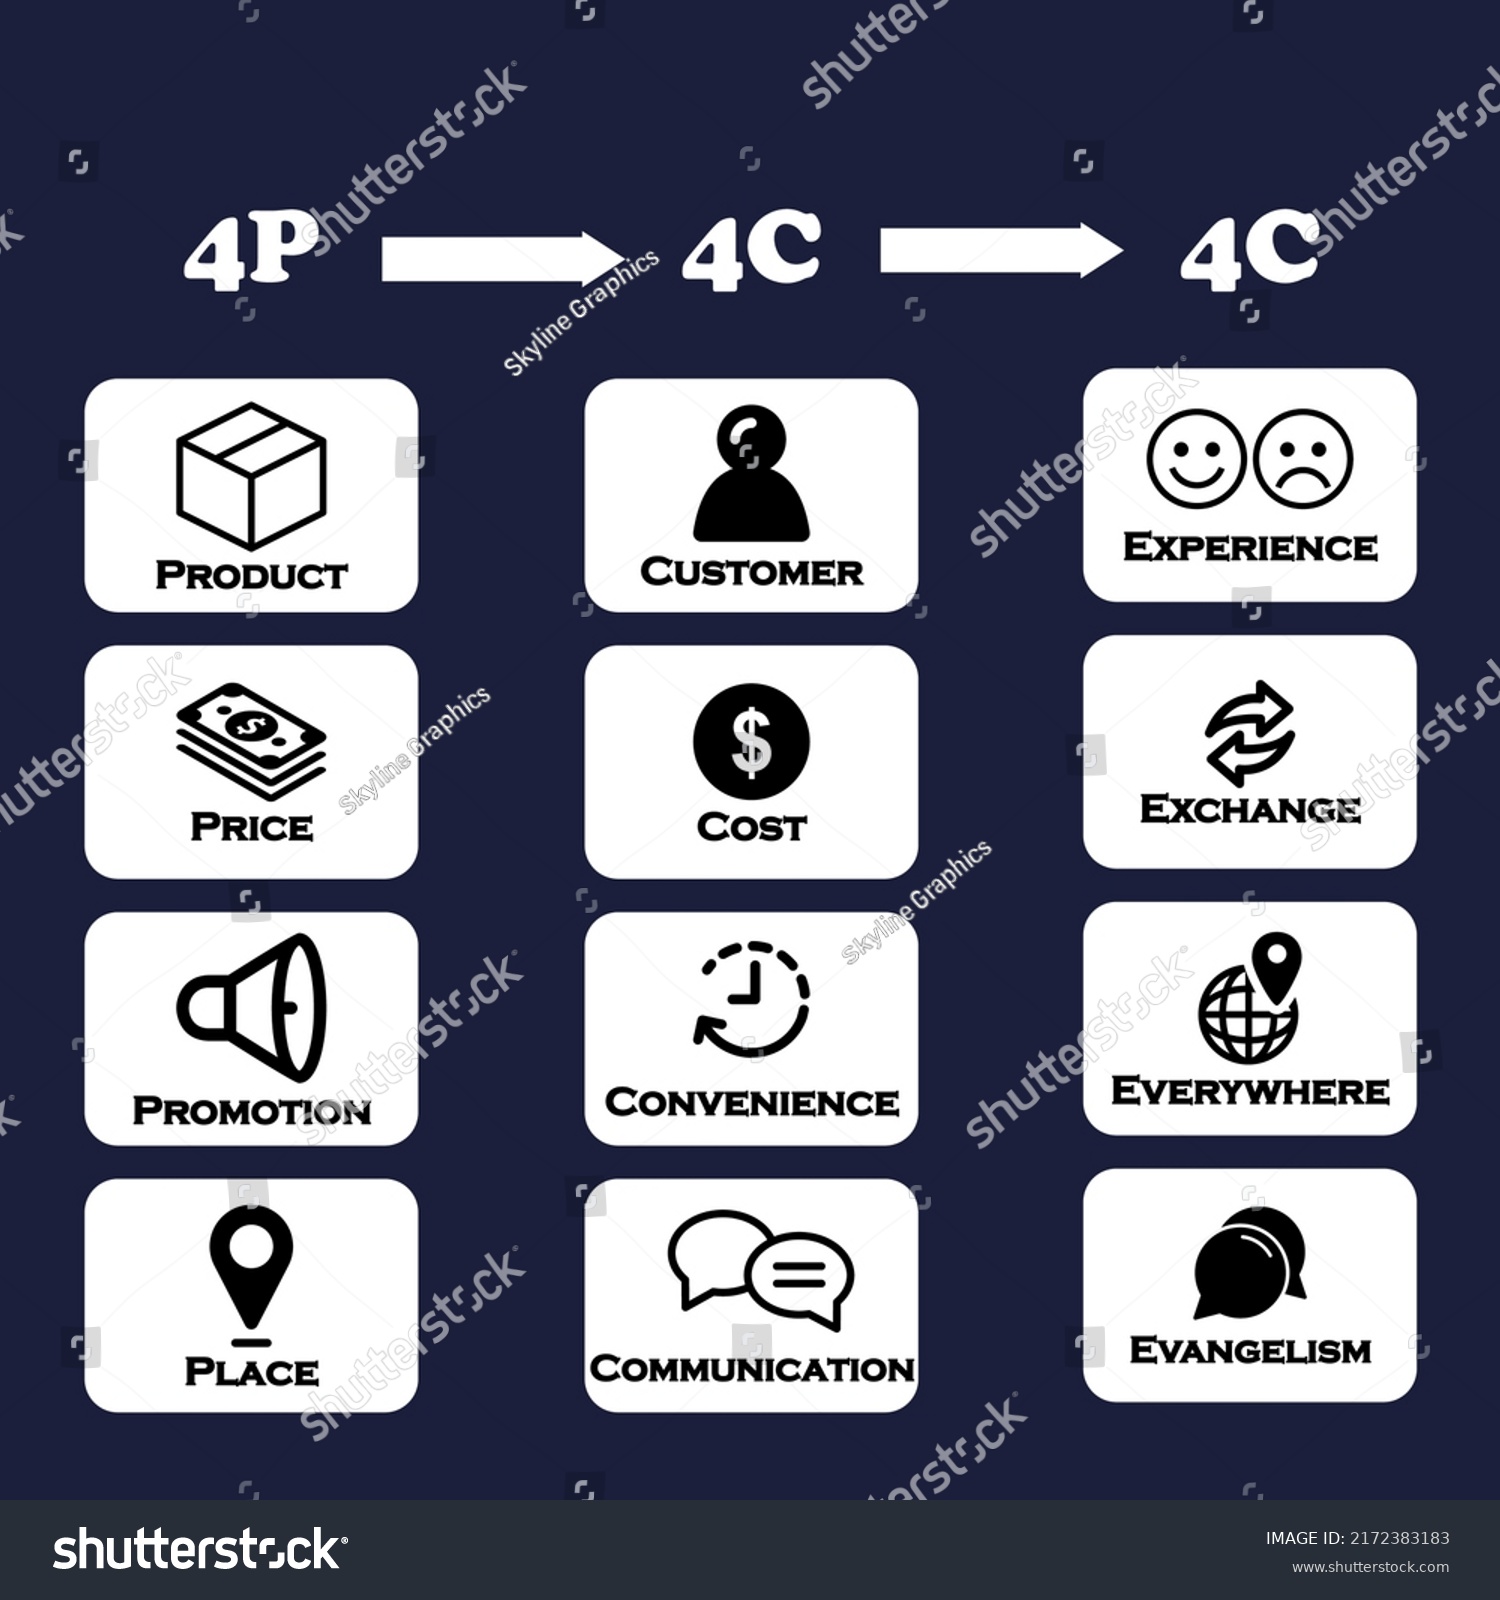 marketing mix of 4P Marketing model, 4C Marketing model and 4E marketing model - With Icons in an Infographic template #2172383183